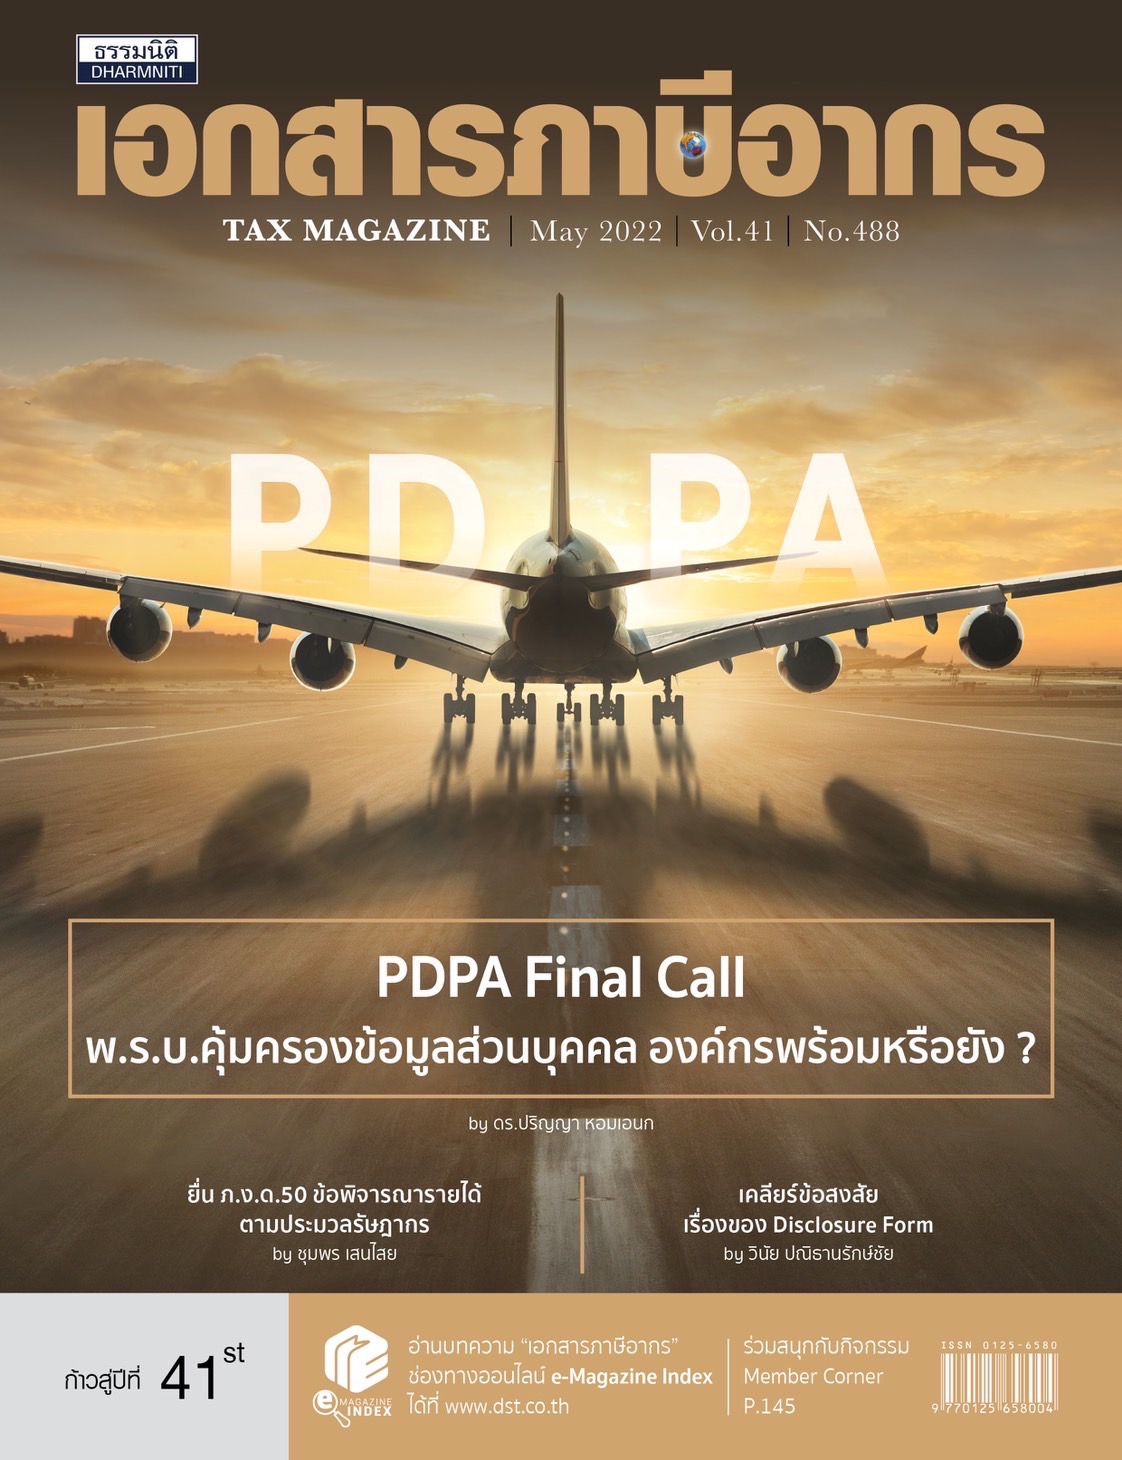 PDPA Final Call พ.ร.บ.คุ้มครองข้อมูลส่วนบุคคล องค์กรพร้อมหรือยัง?